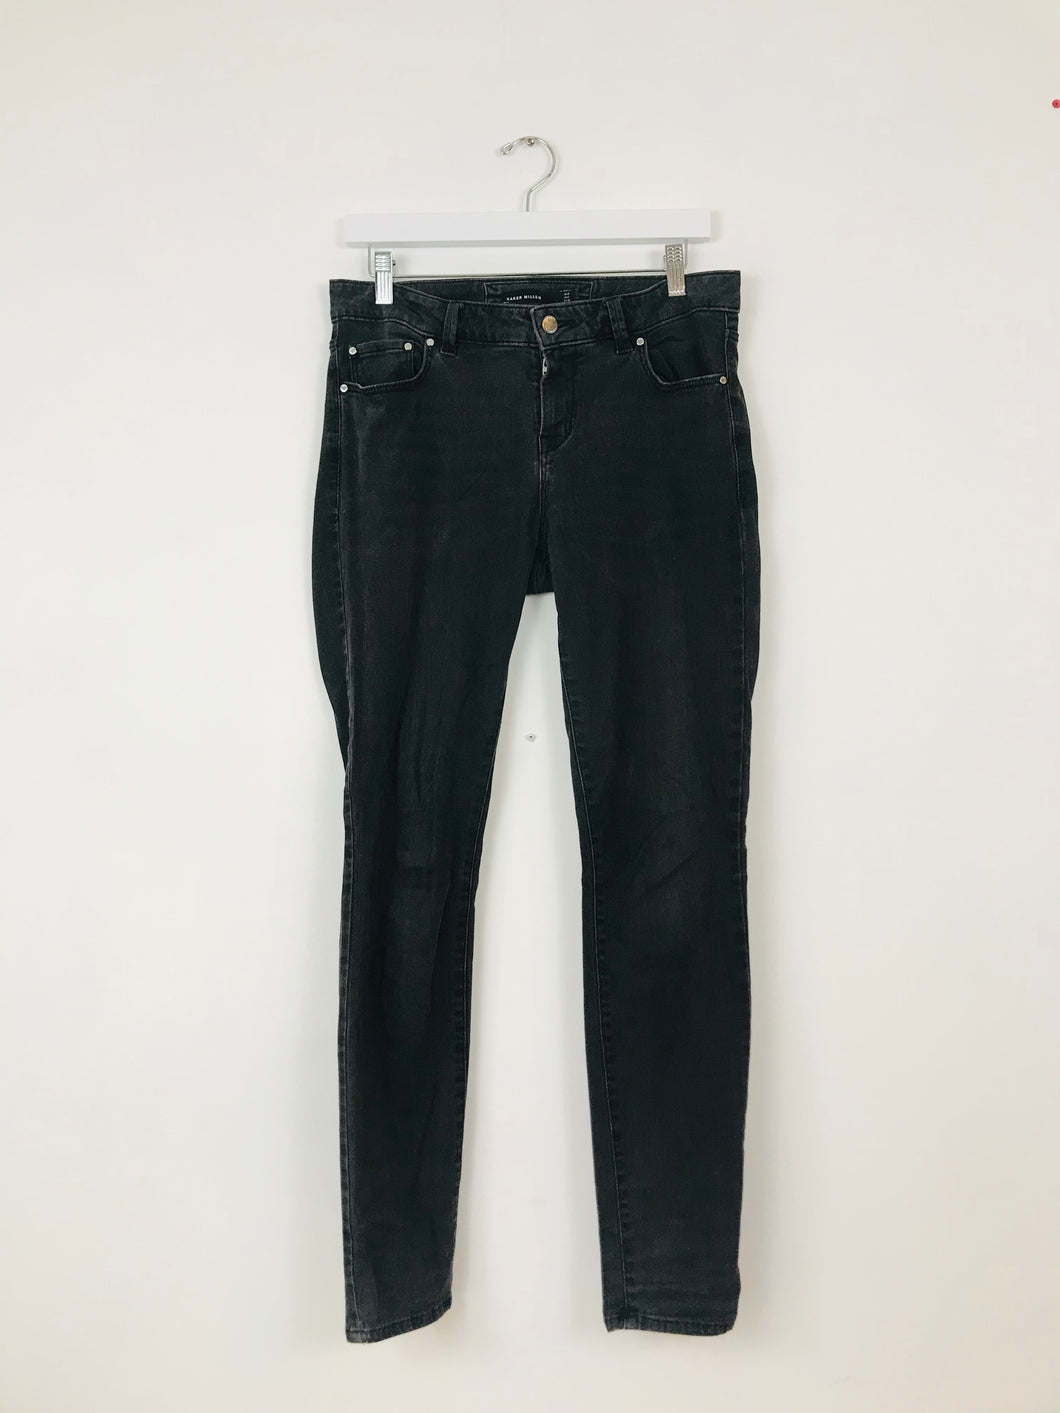 Karen Millen Womens Skinny Jeans | UK12 W32 L30 | Washed Black